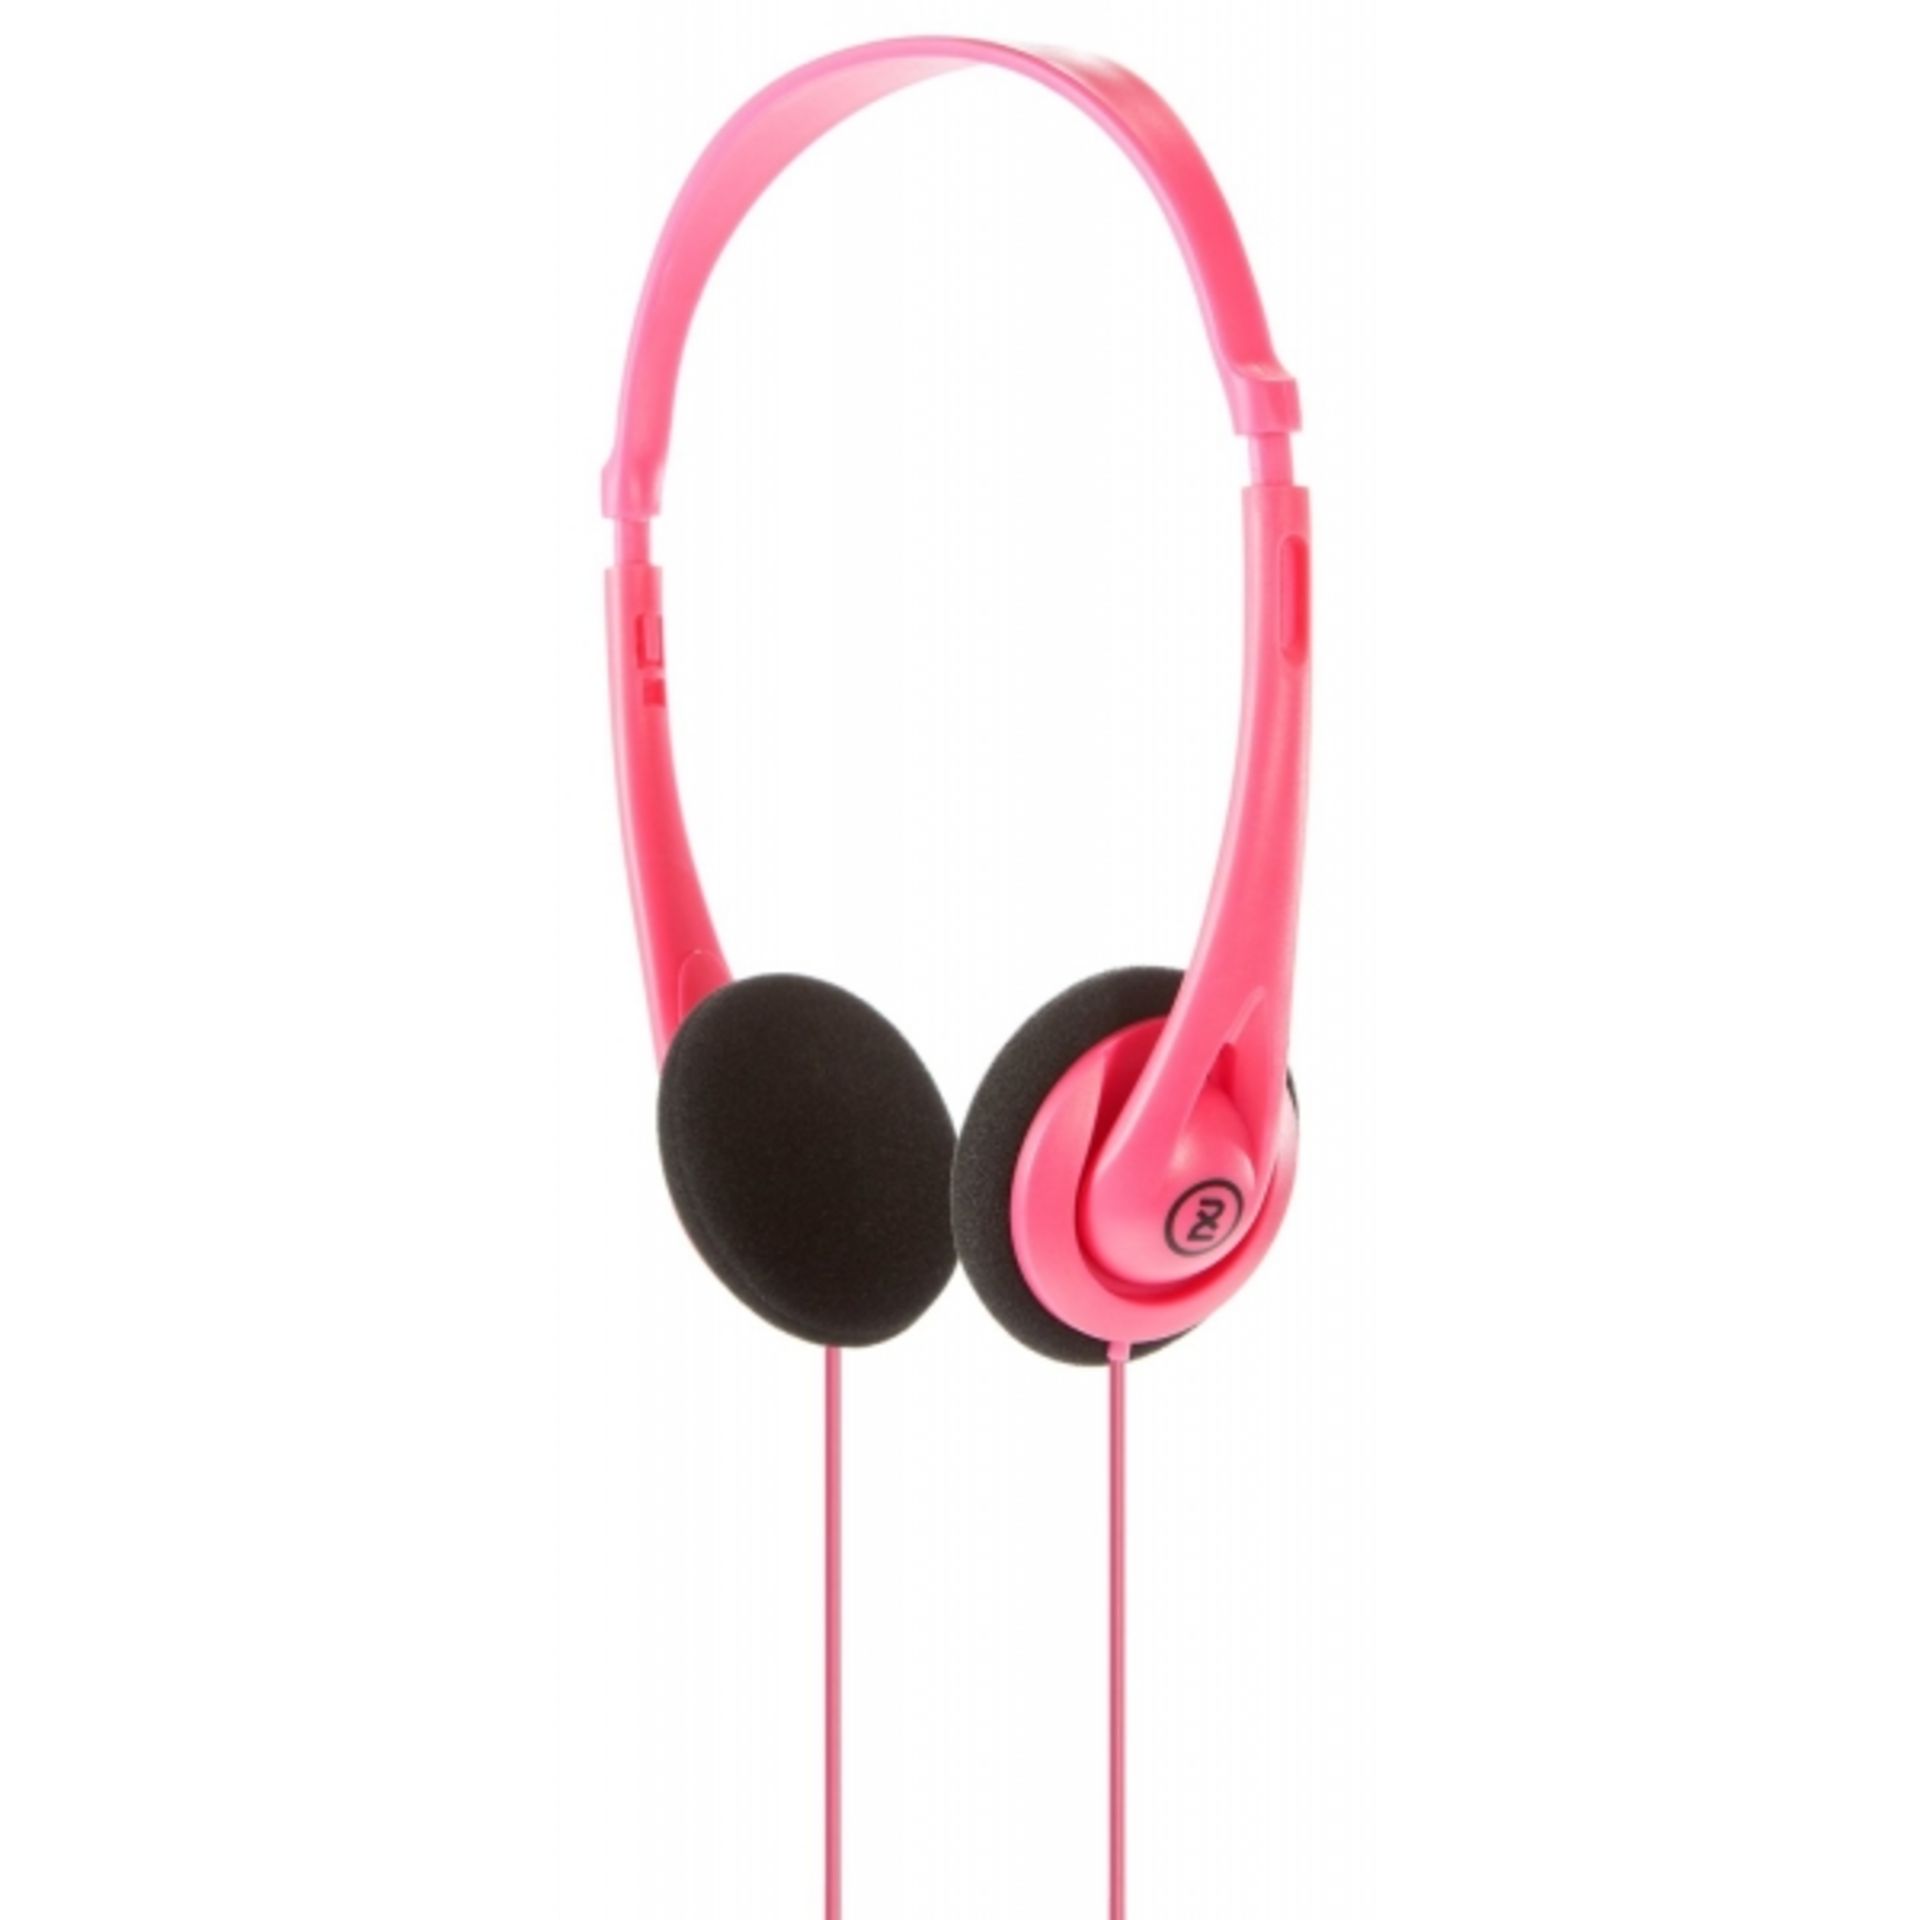 V *TRADE QTY* Brand New Skullcandy 2XL Wage Pink Headphones With Adjustable Headband X 8 Bid price